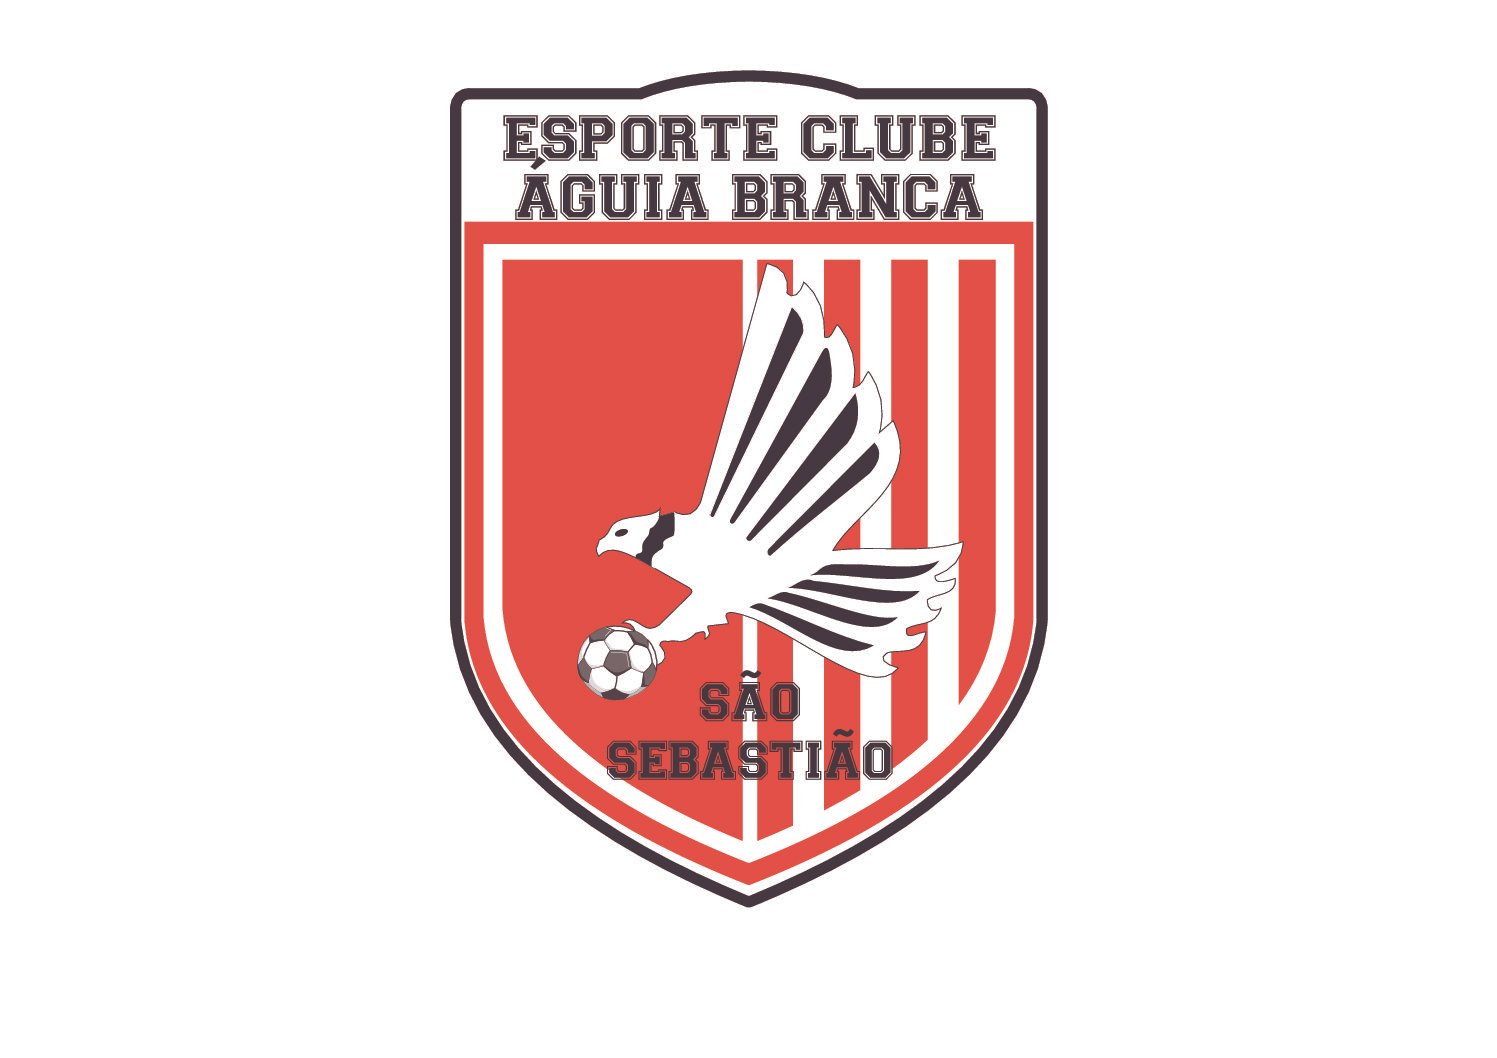 ESPORTE CLUBE ÁGUIA BRANCA